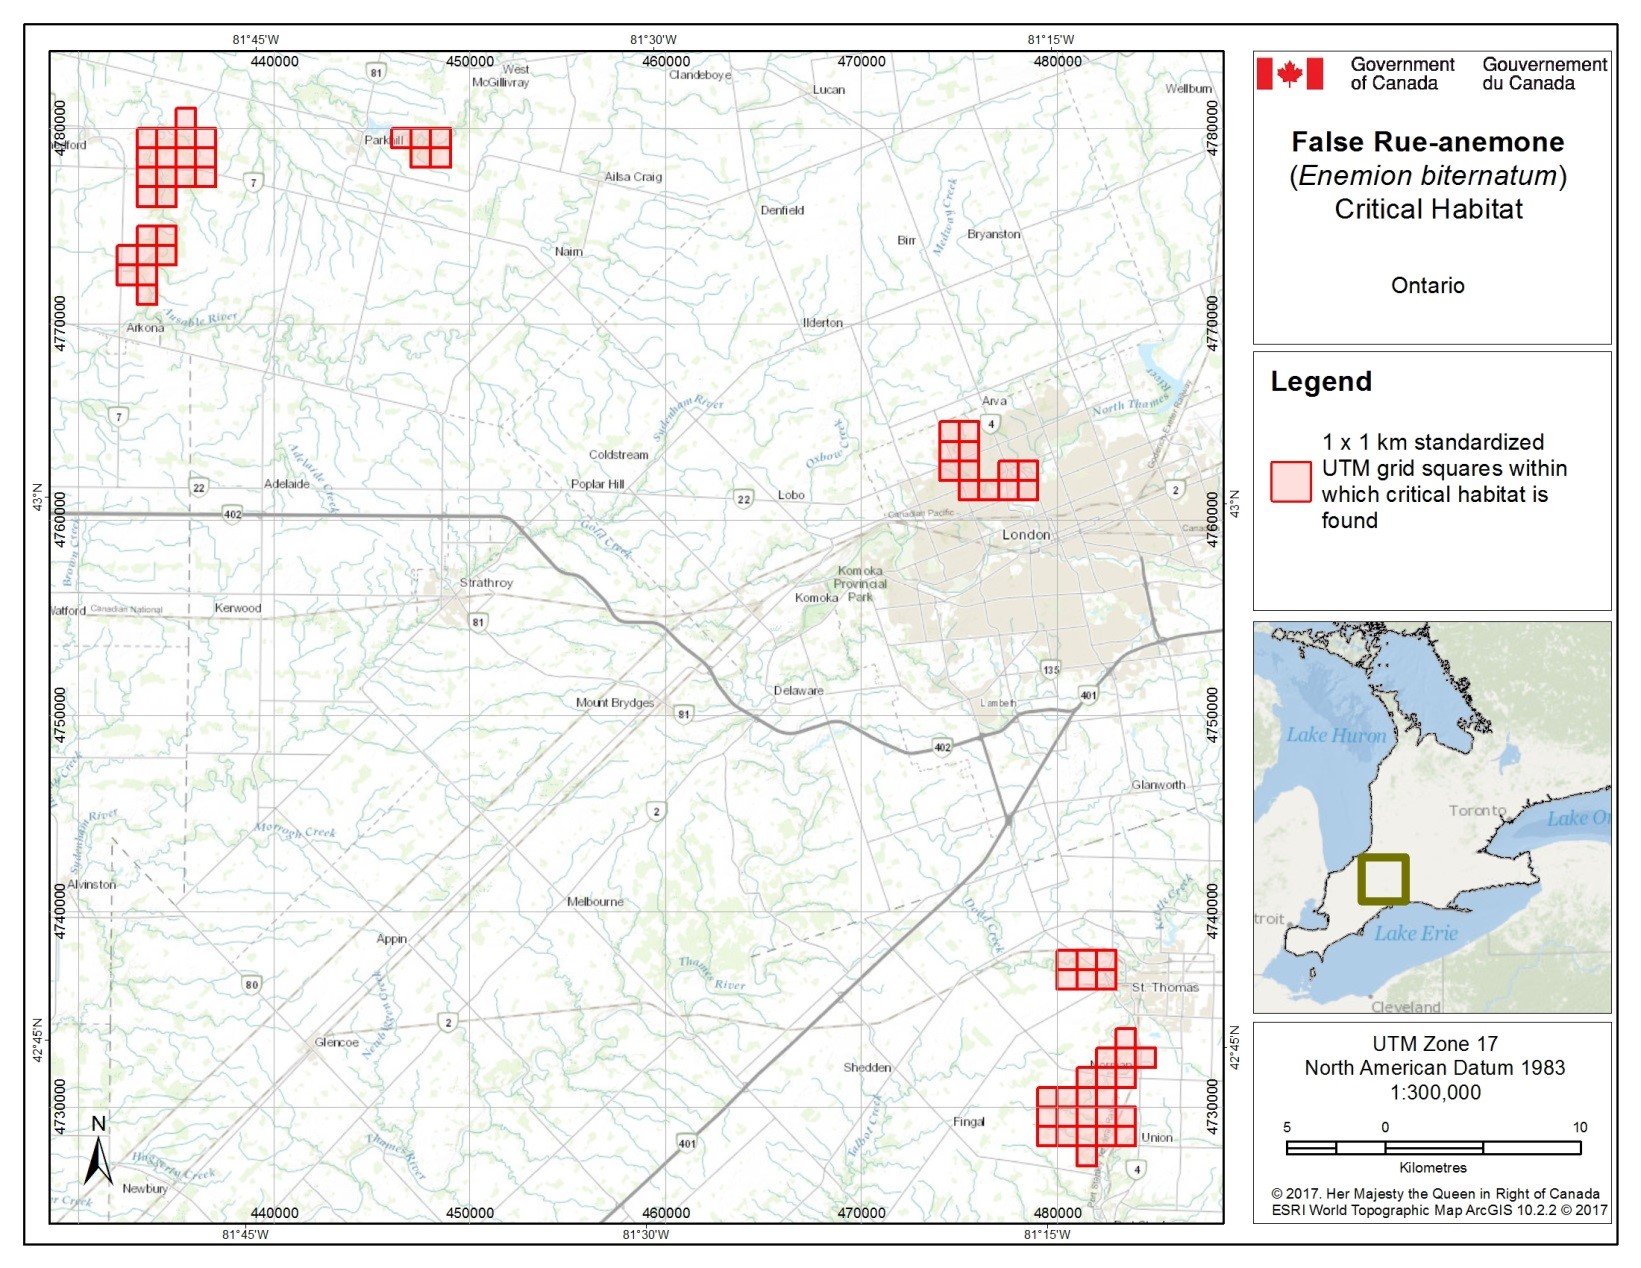 Map of identified Critical Habitat for False Rue-anemone in Canada